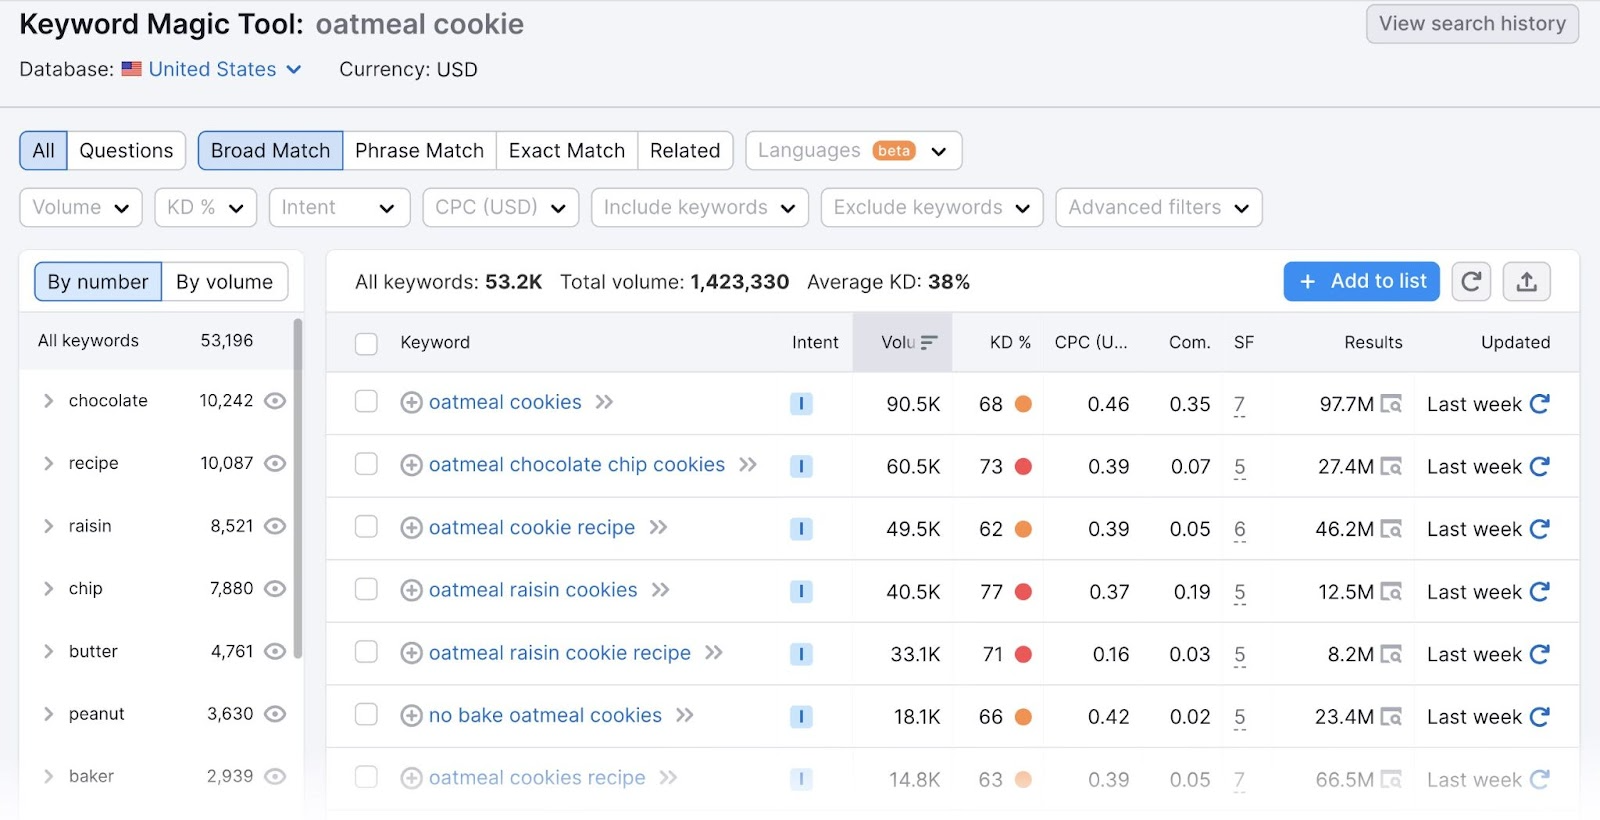 "oatmeal cookie" related keyword ideas in Keyword Magic Tool